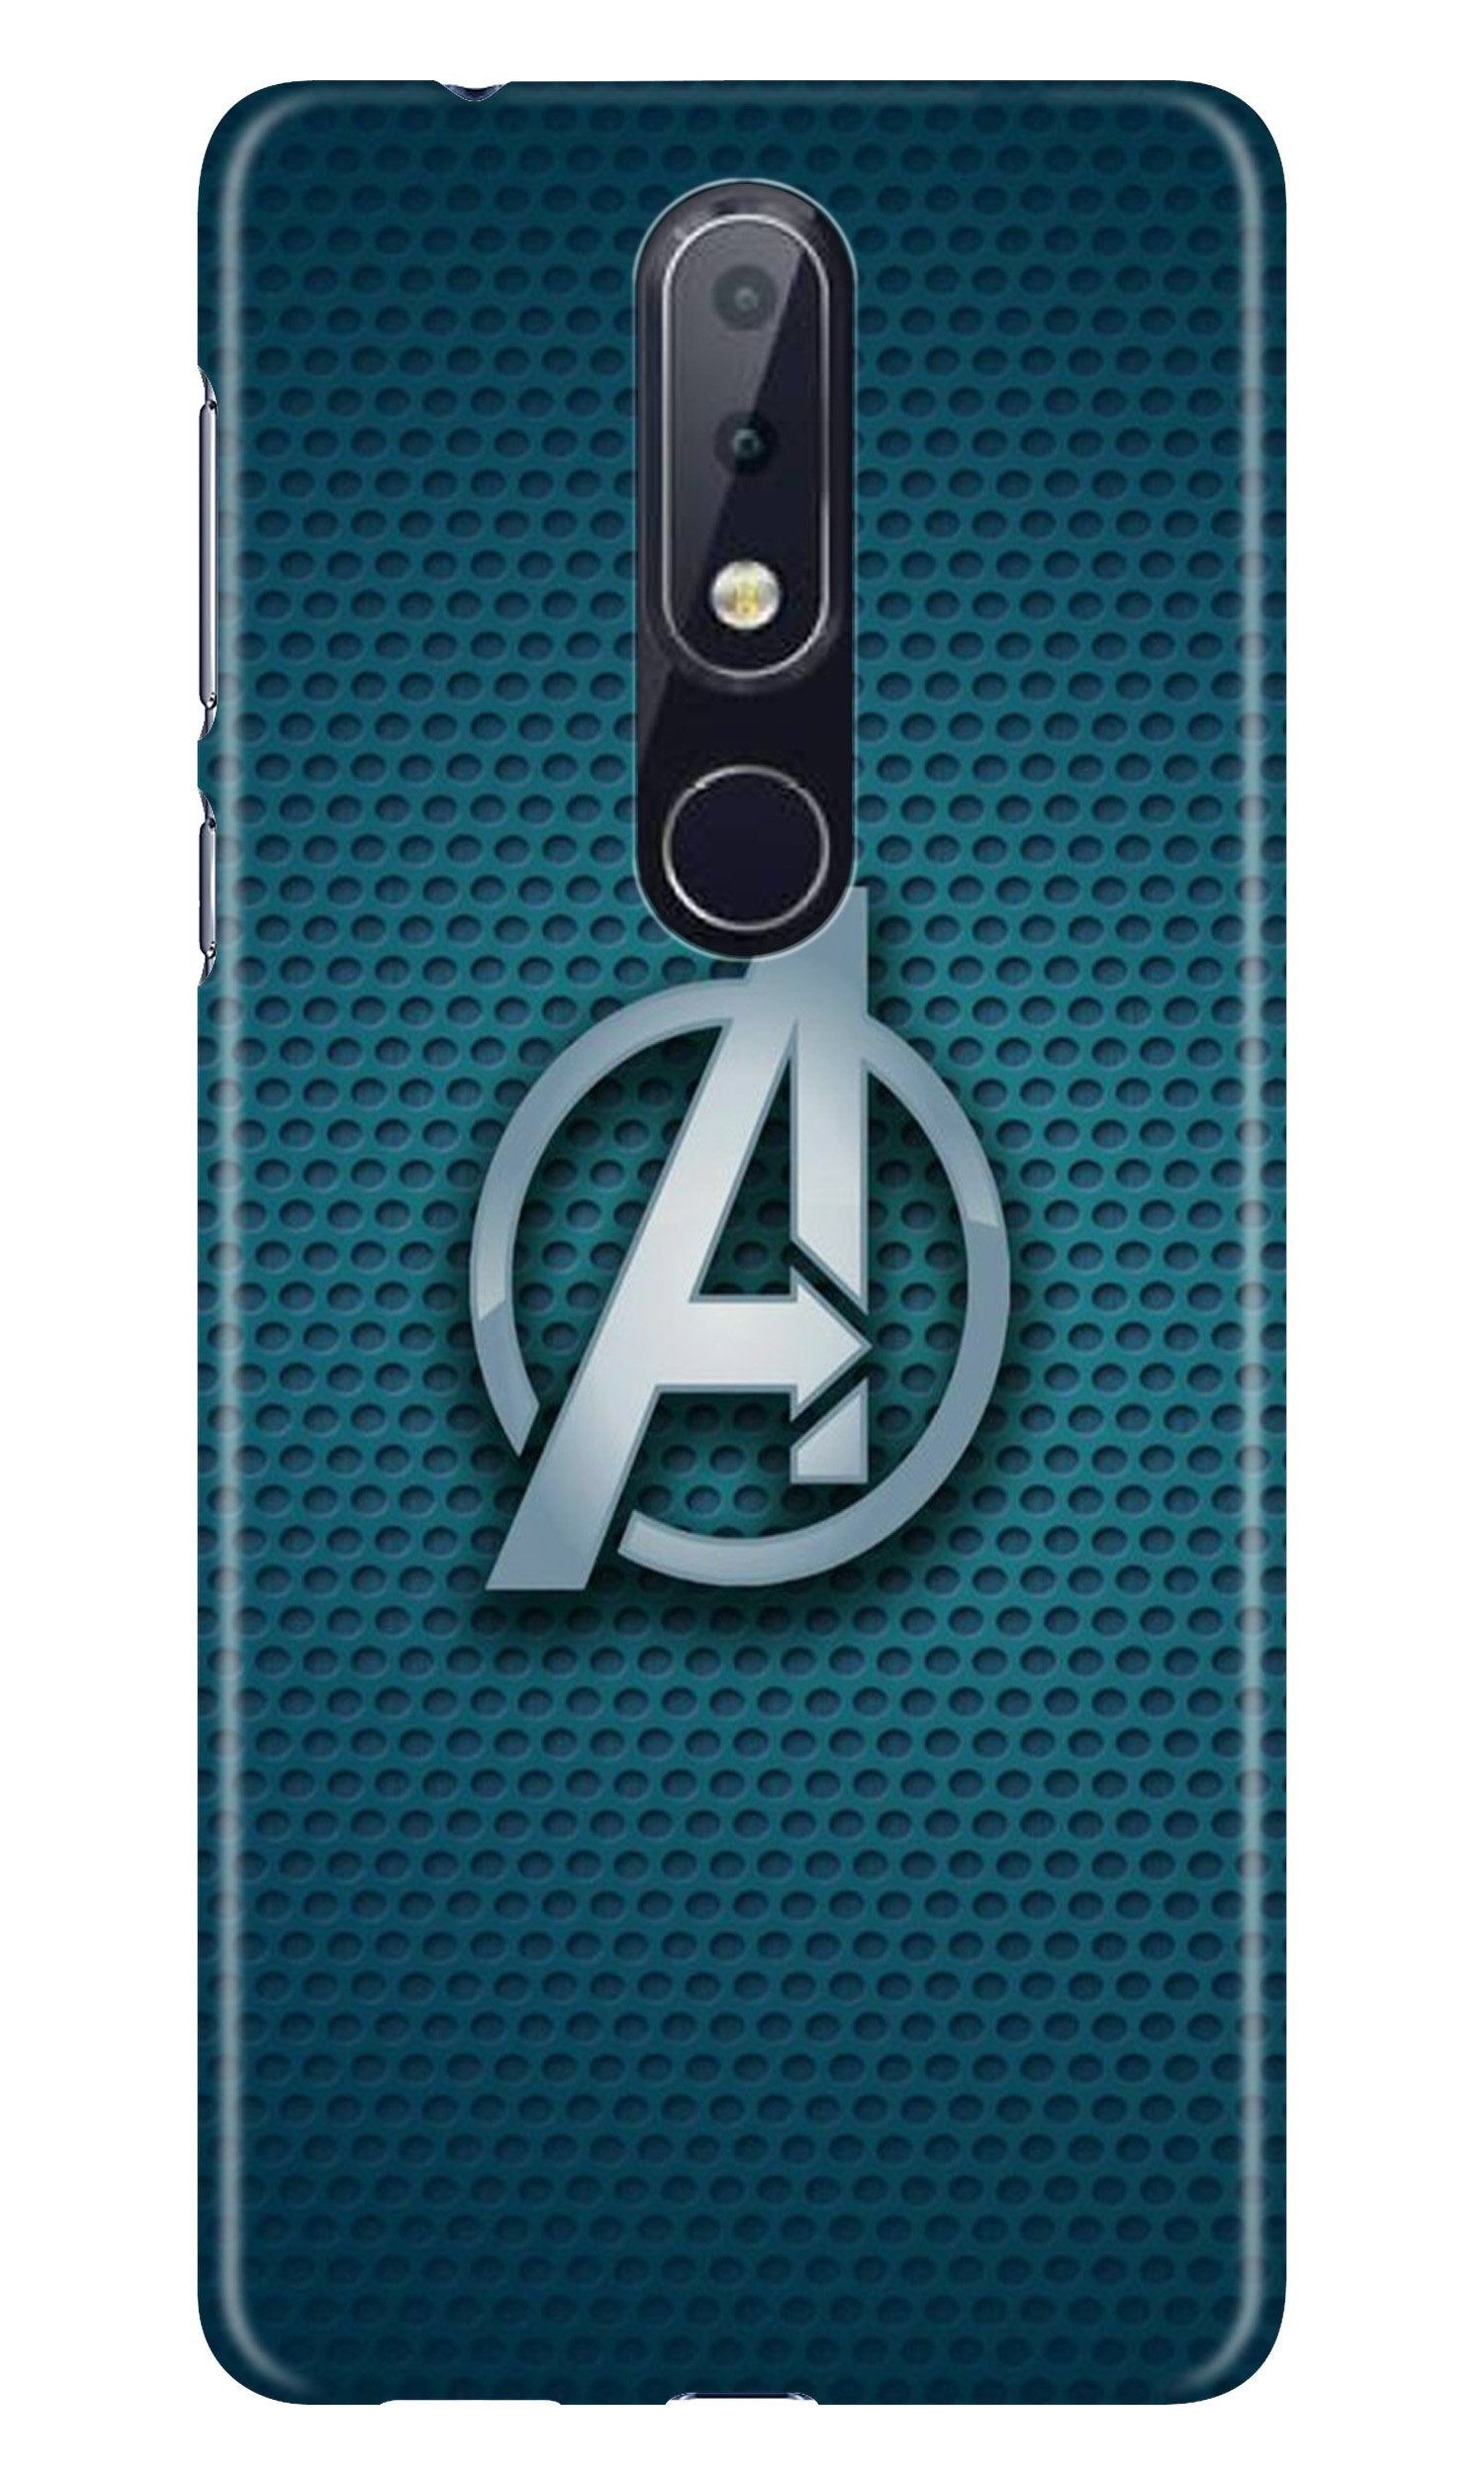 Avengers Case for Nokia 7.1 (Design No. 246)